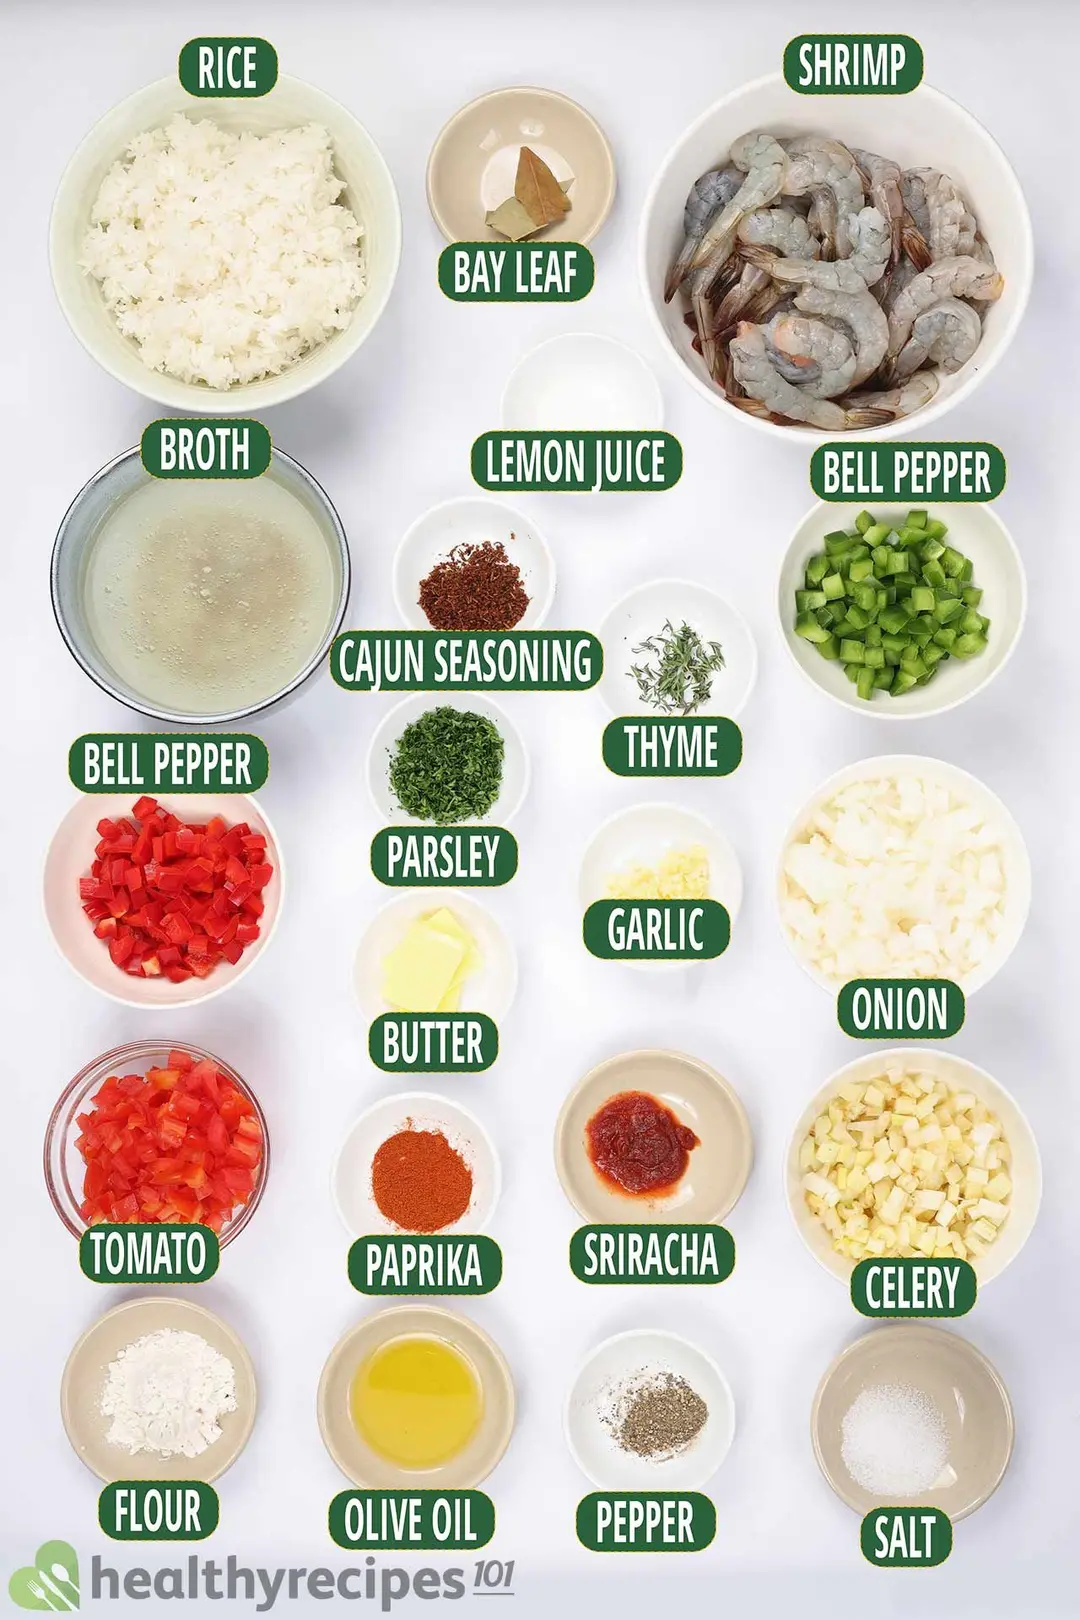 Ingredients for Shrimp Etouffee